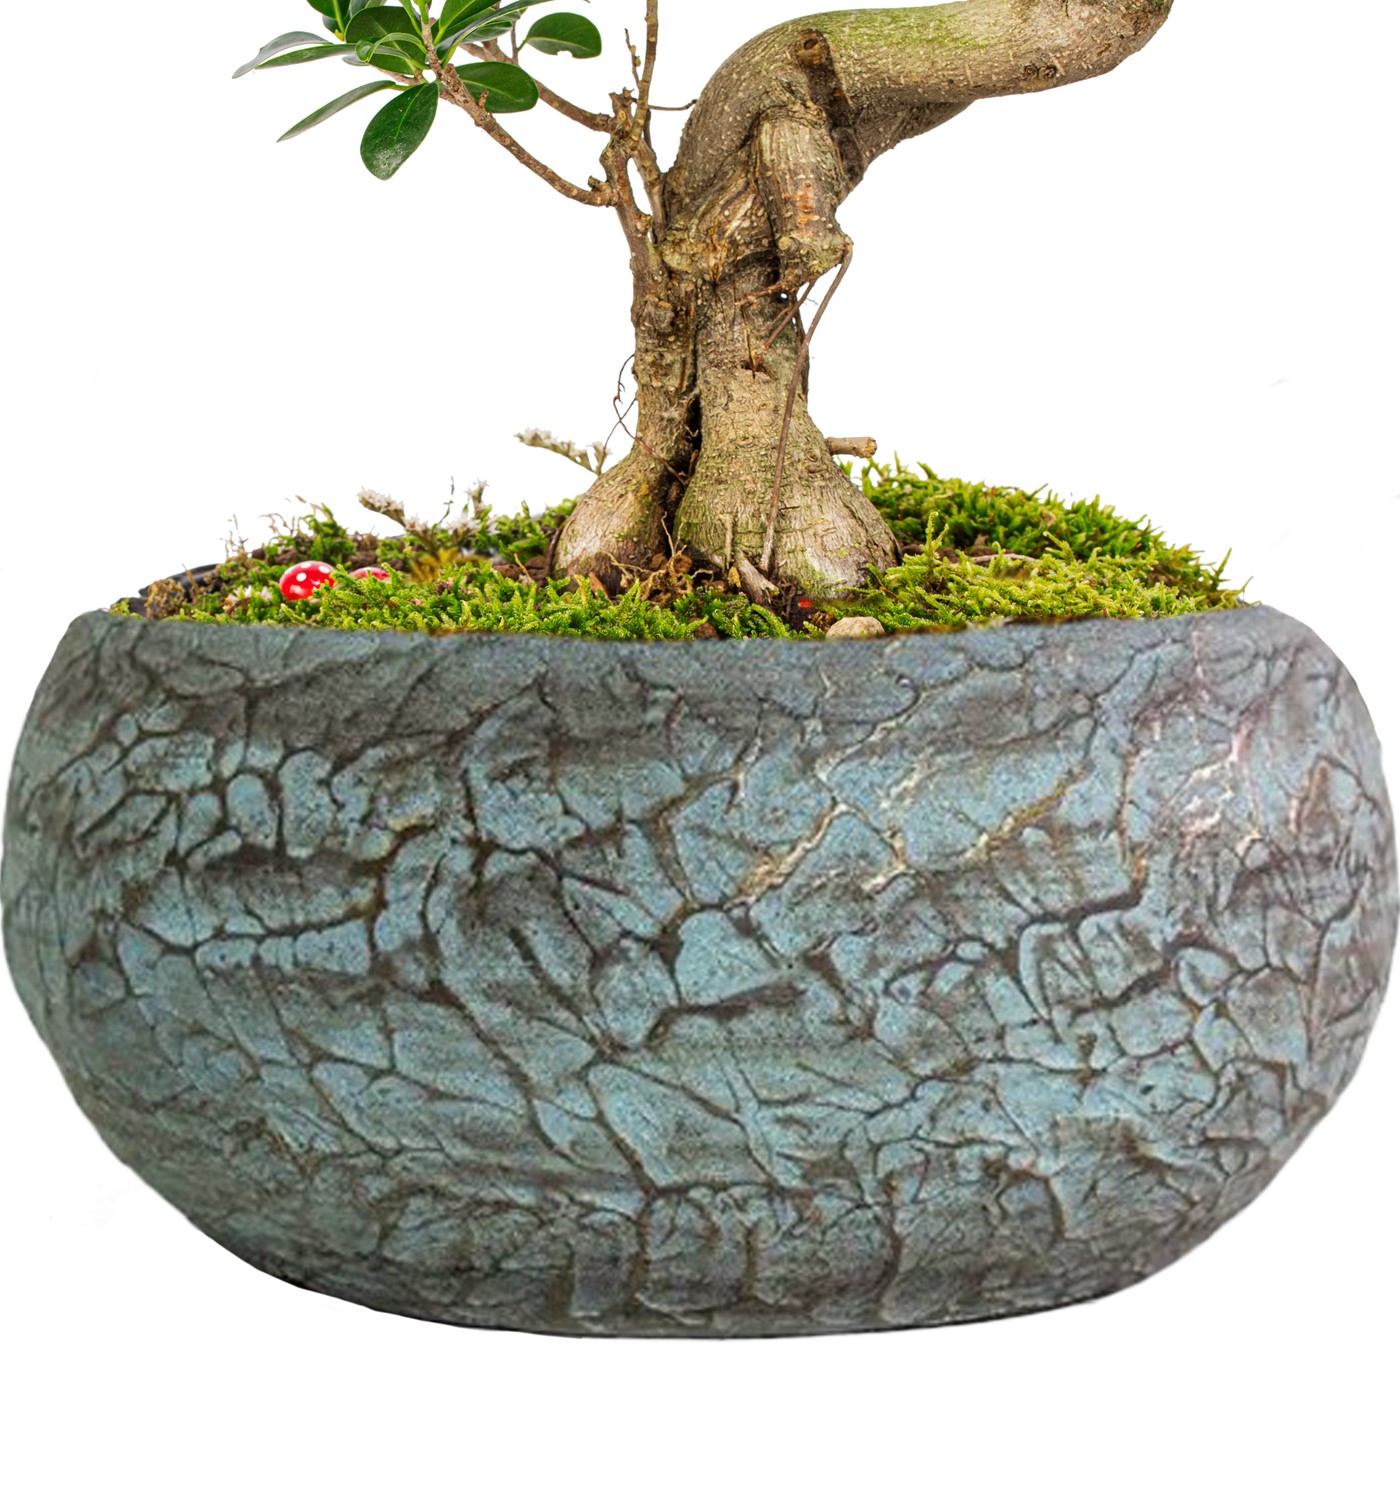 Magnificent Saksıda S Gövde Ficus Ginseng Bonsai Tasarım - 3